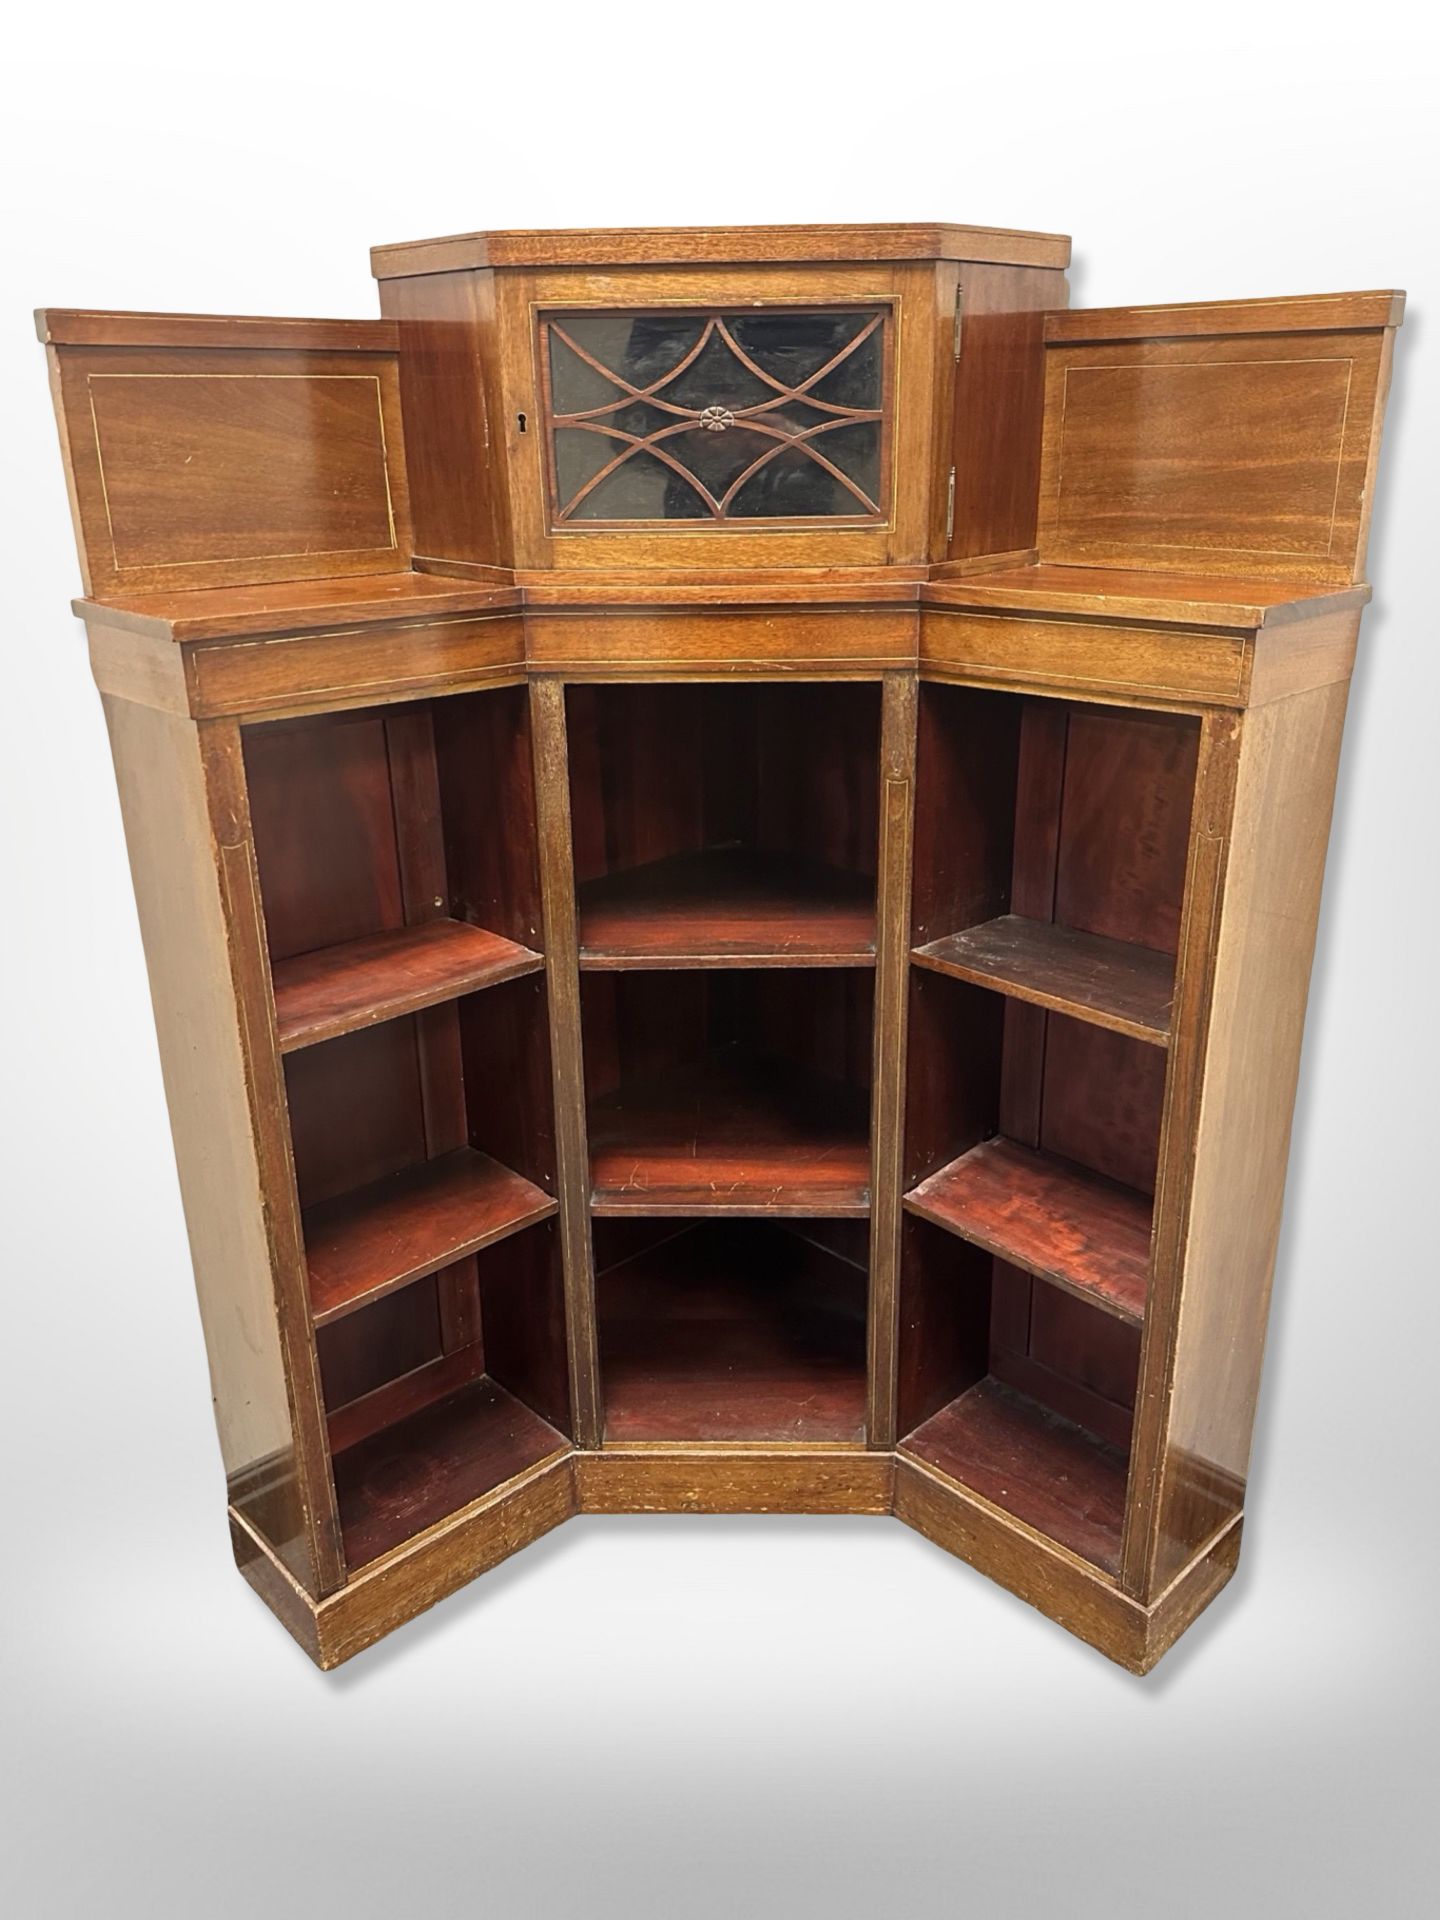 A 19th century continental mahogany corner bookcase,